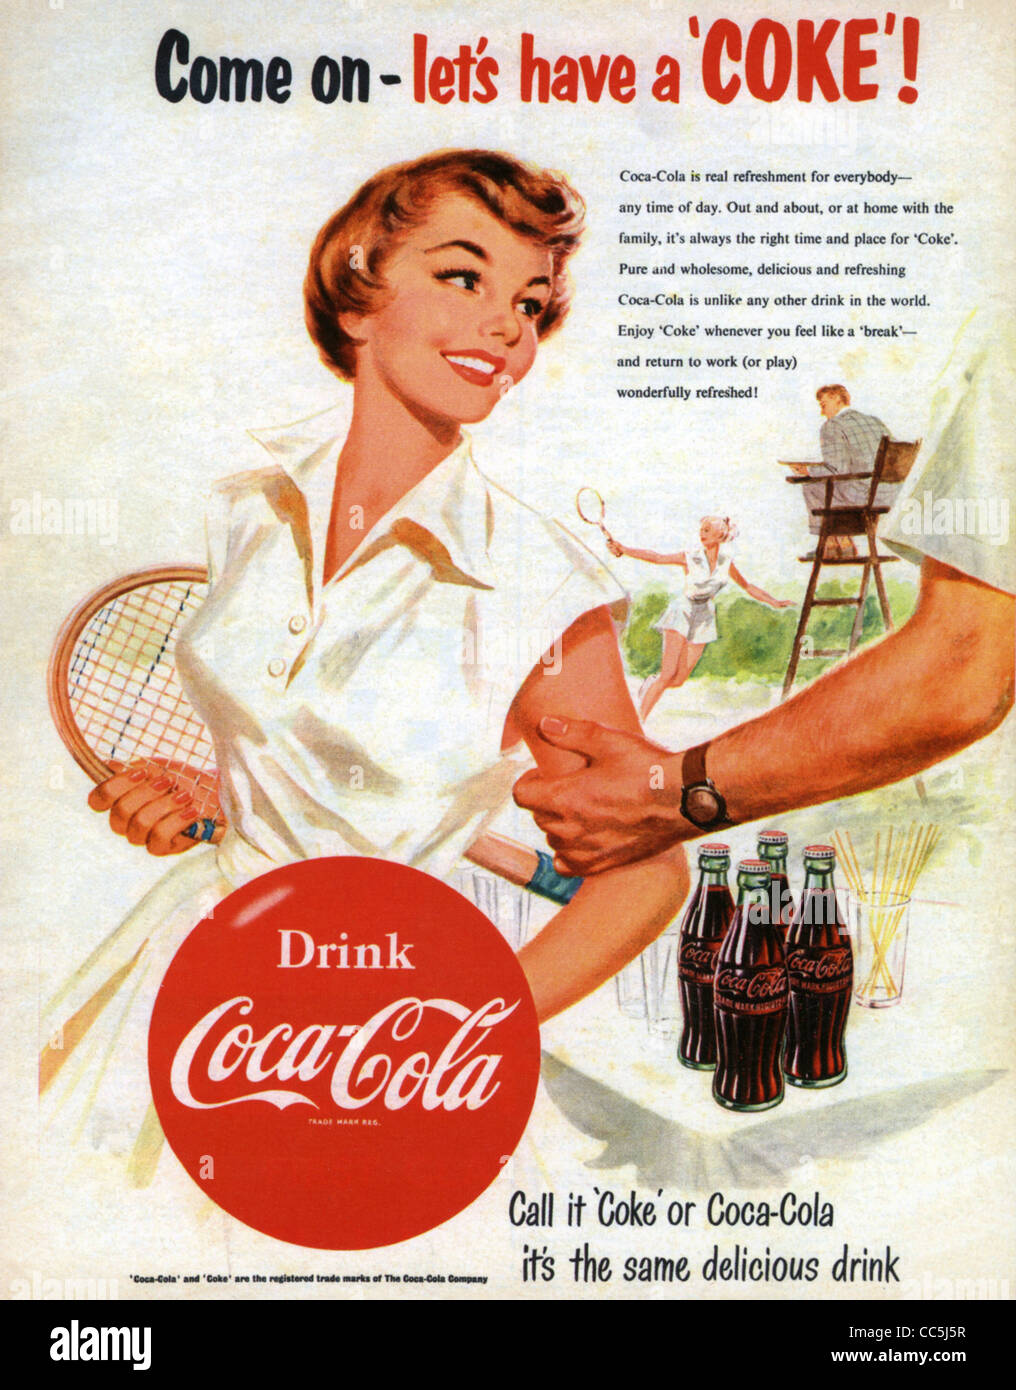 COCA-COLA advert ca. 1960 Stockfotografie - Alamy